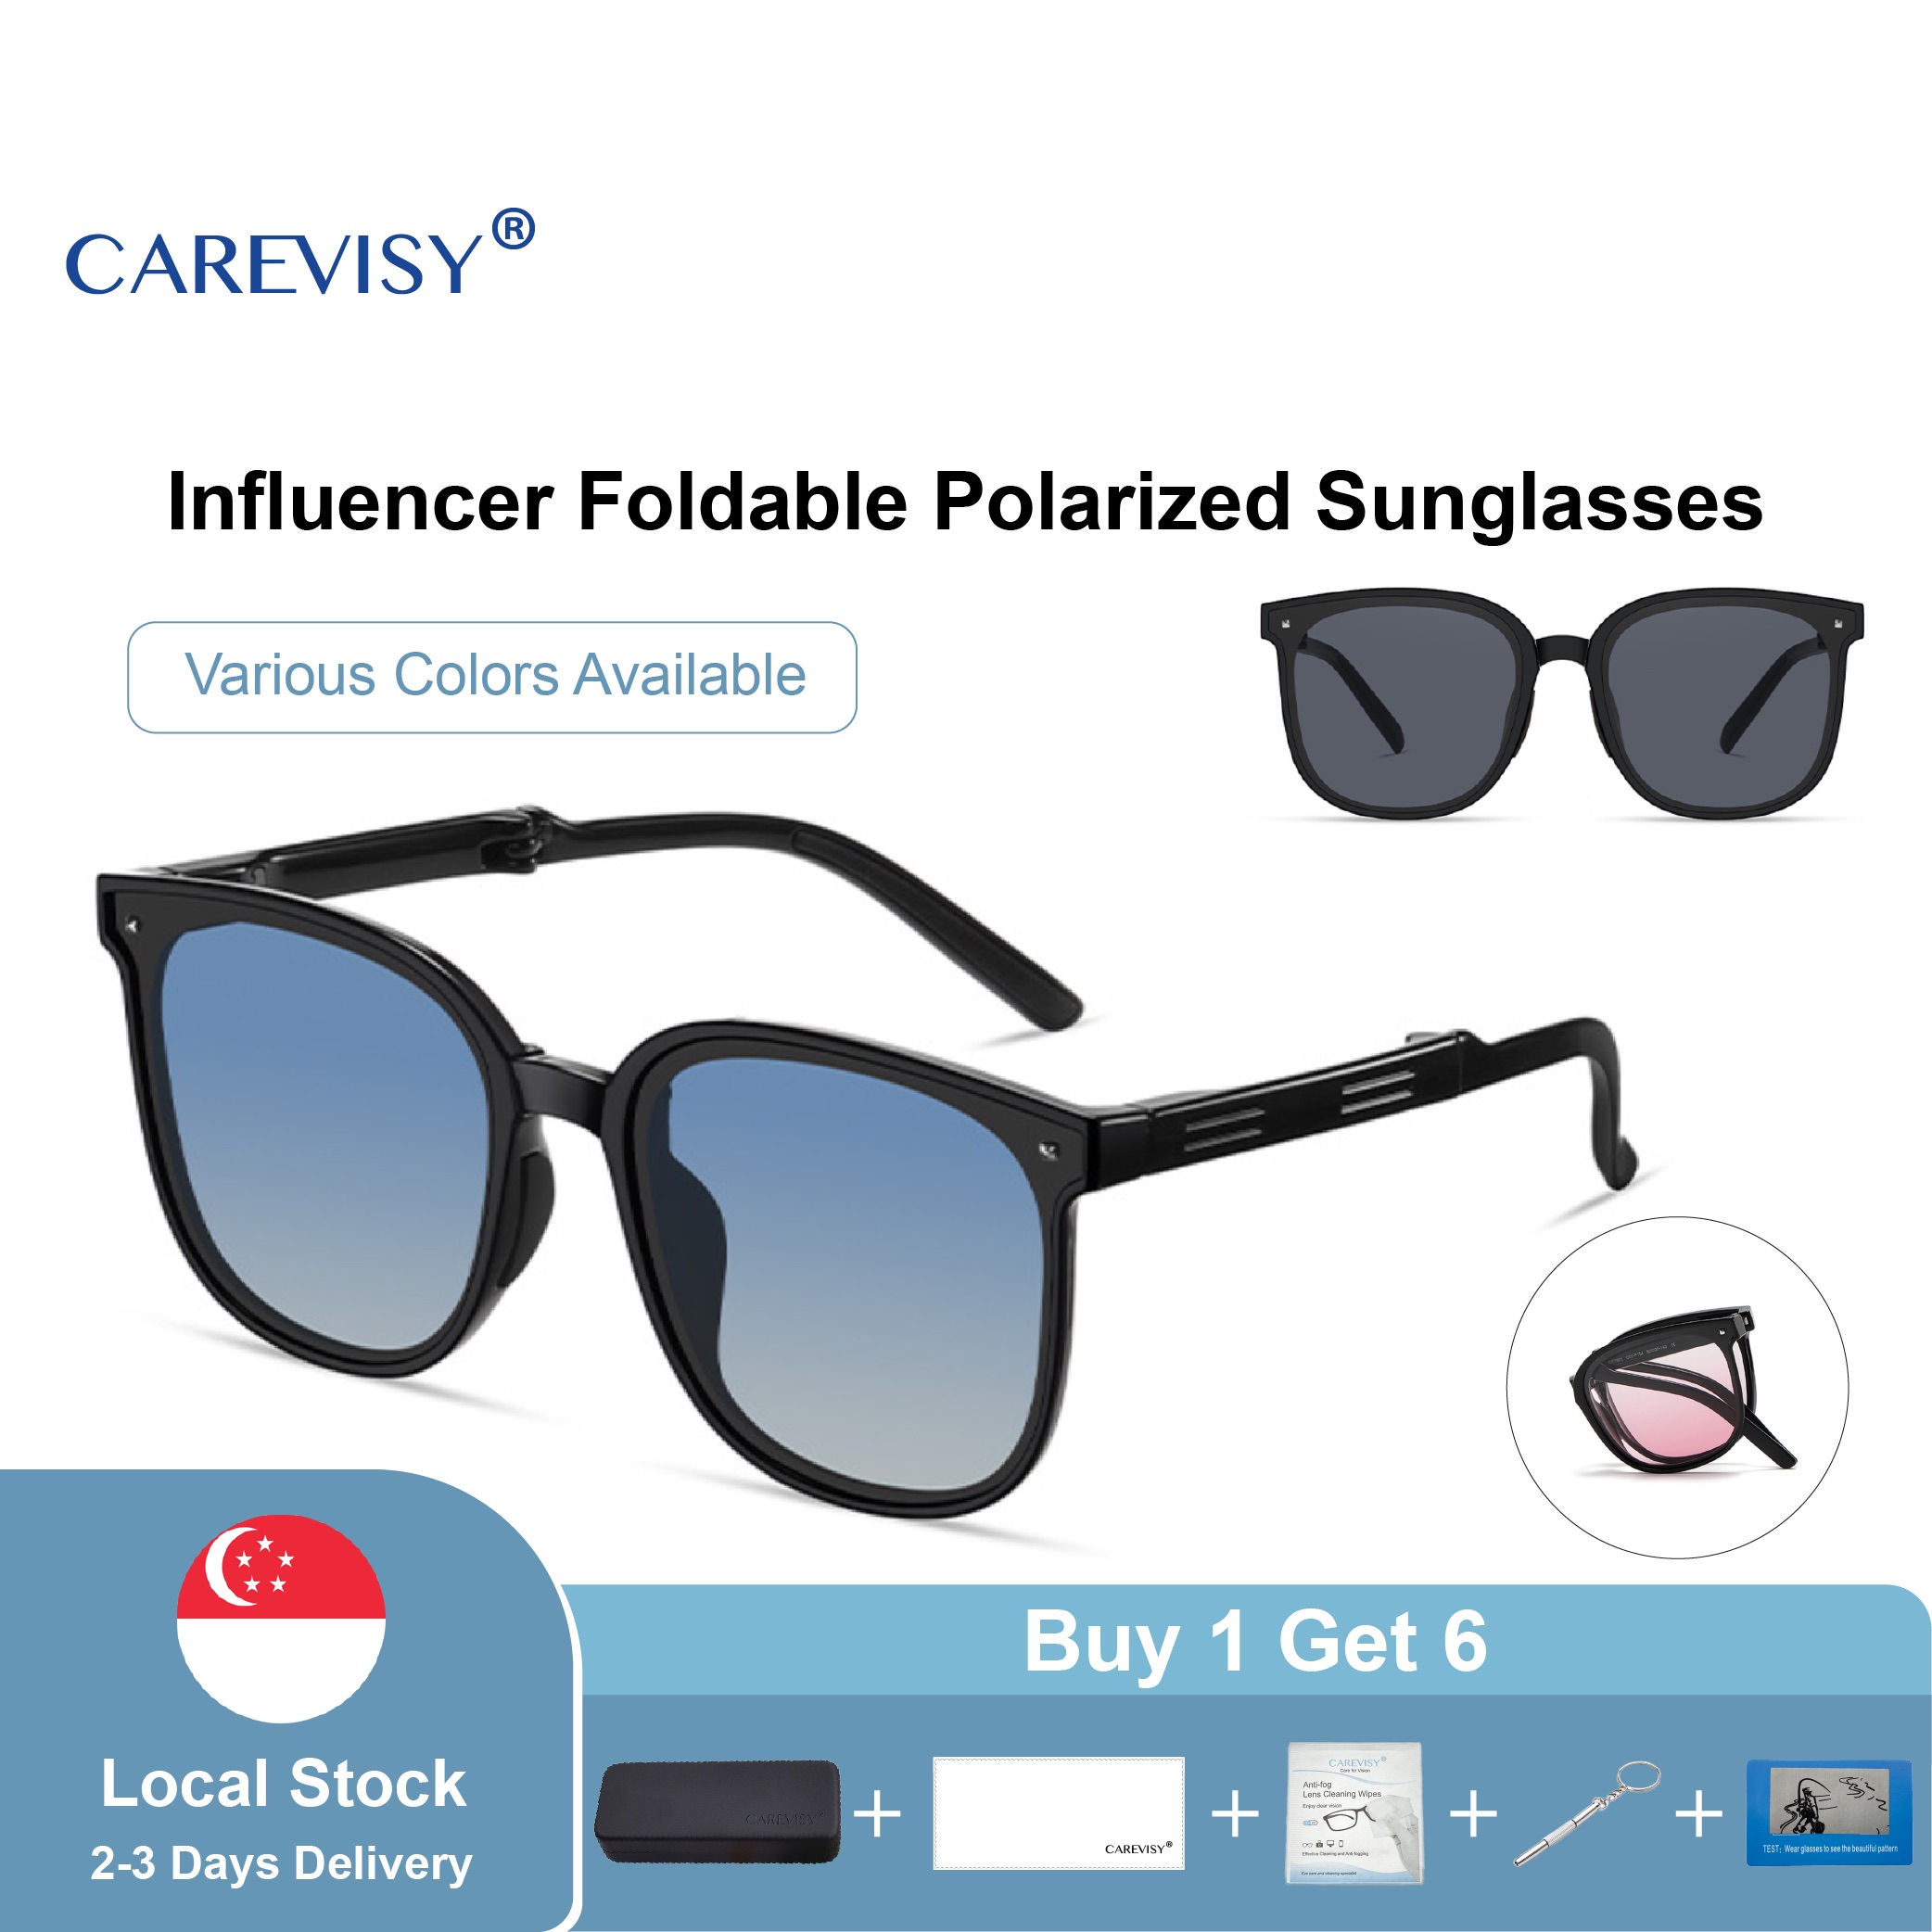 CAREVISY Influencer Polarized Sunglasses Foldable UV400 Protection